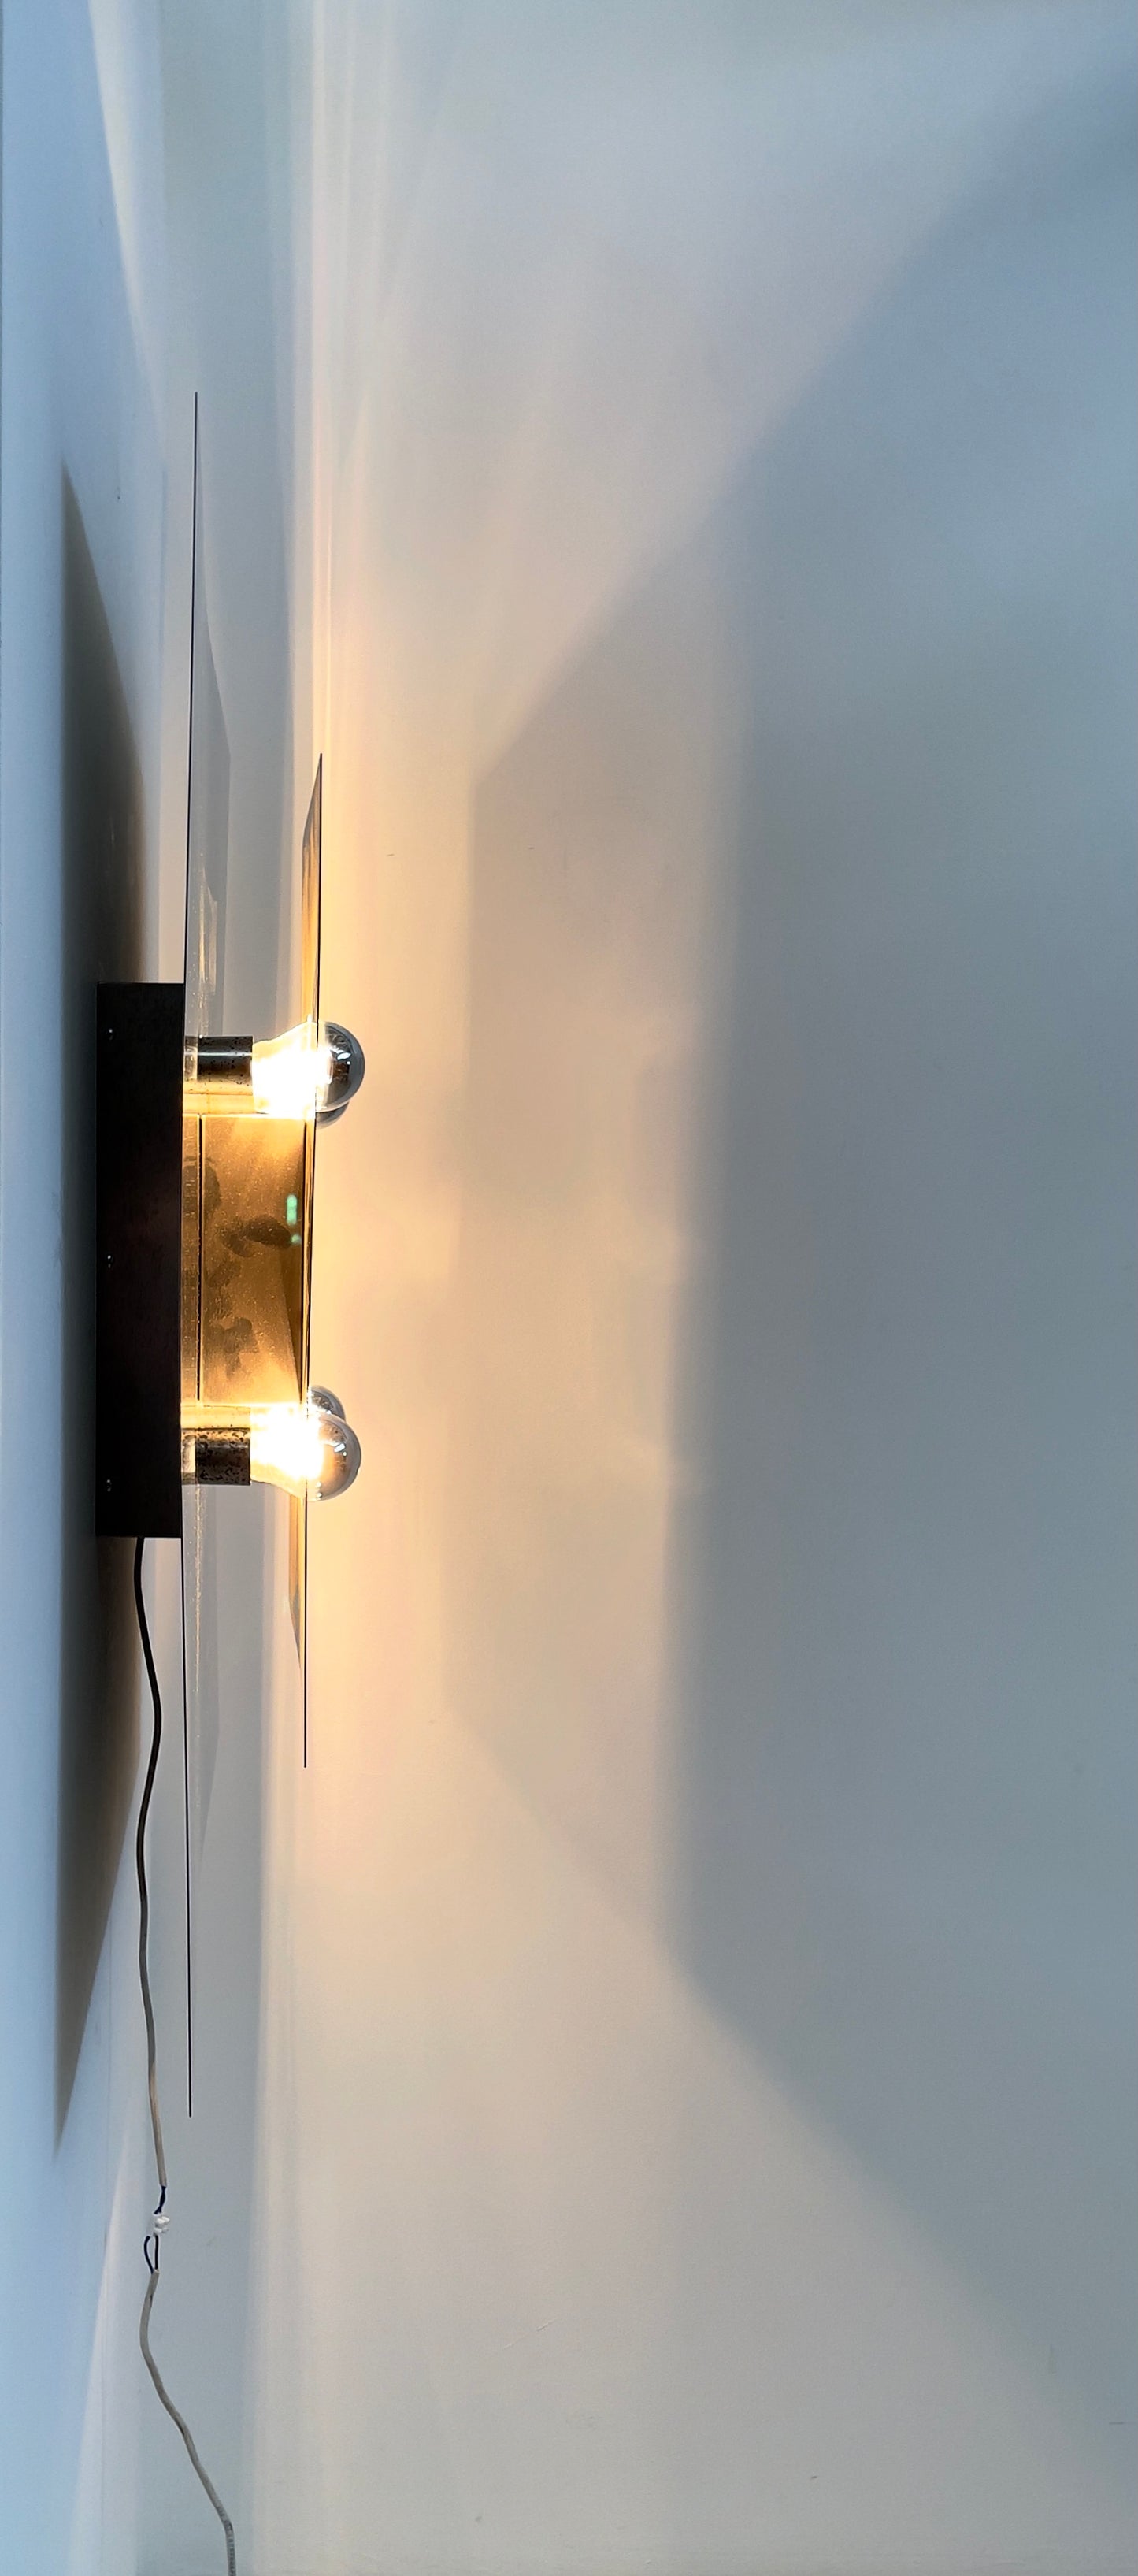 GIANFRANCO FINI & FABRIZIO COCCHIA for NEW LAMP. Luminous panel mod. Screen.